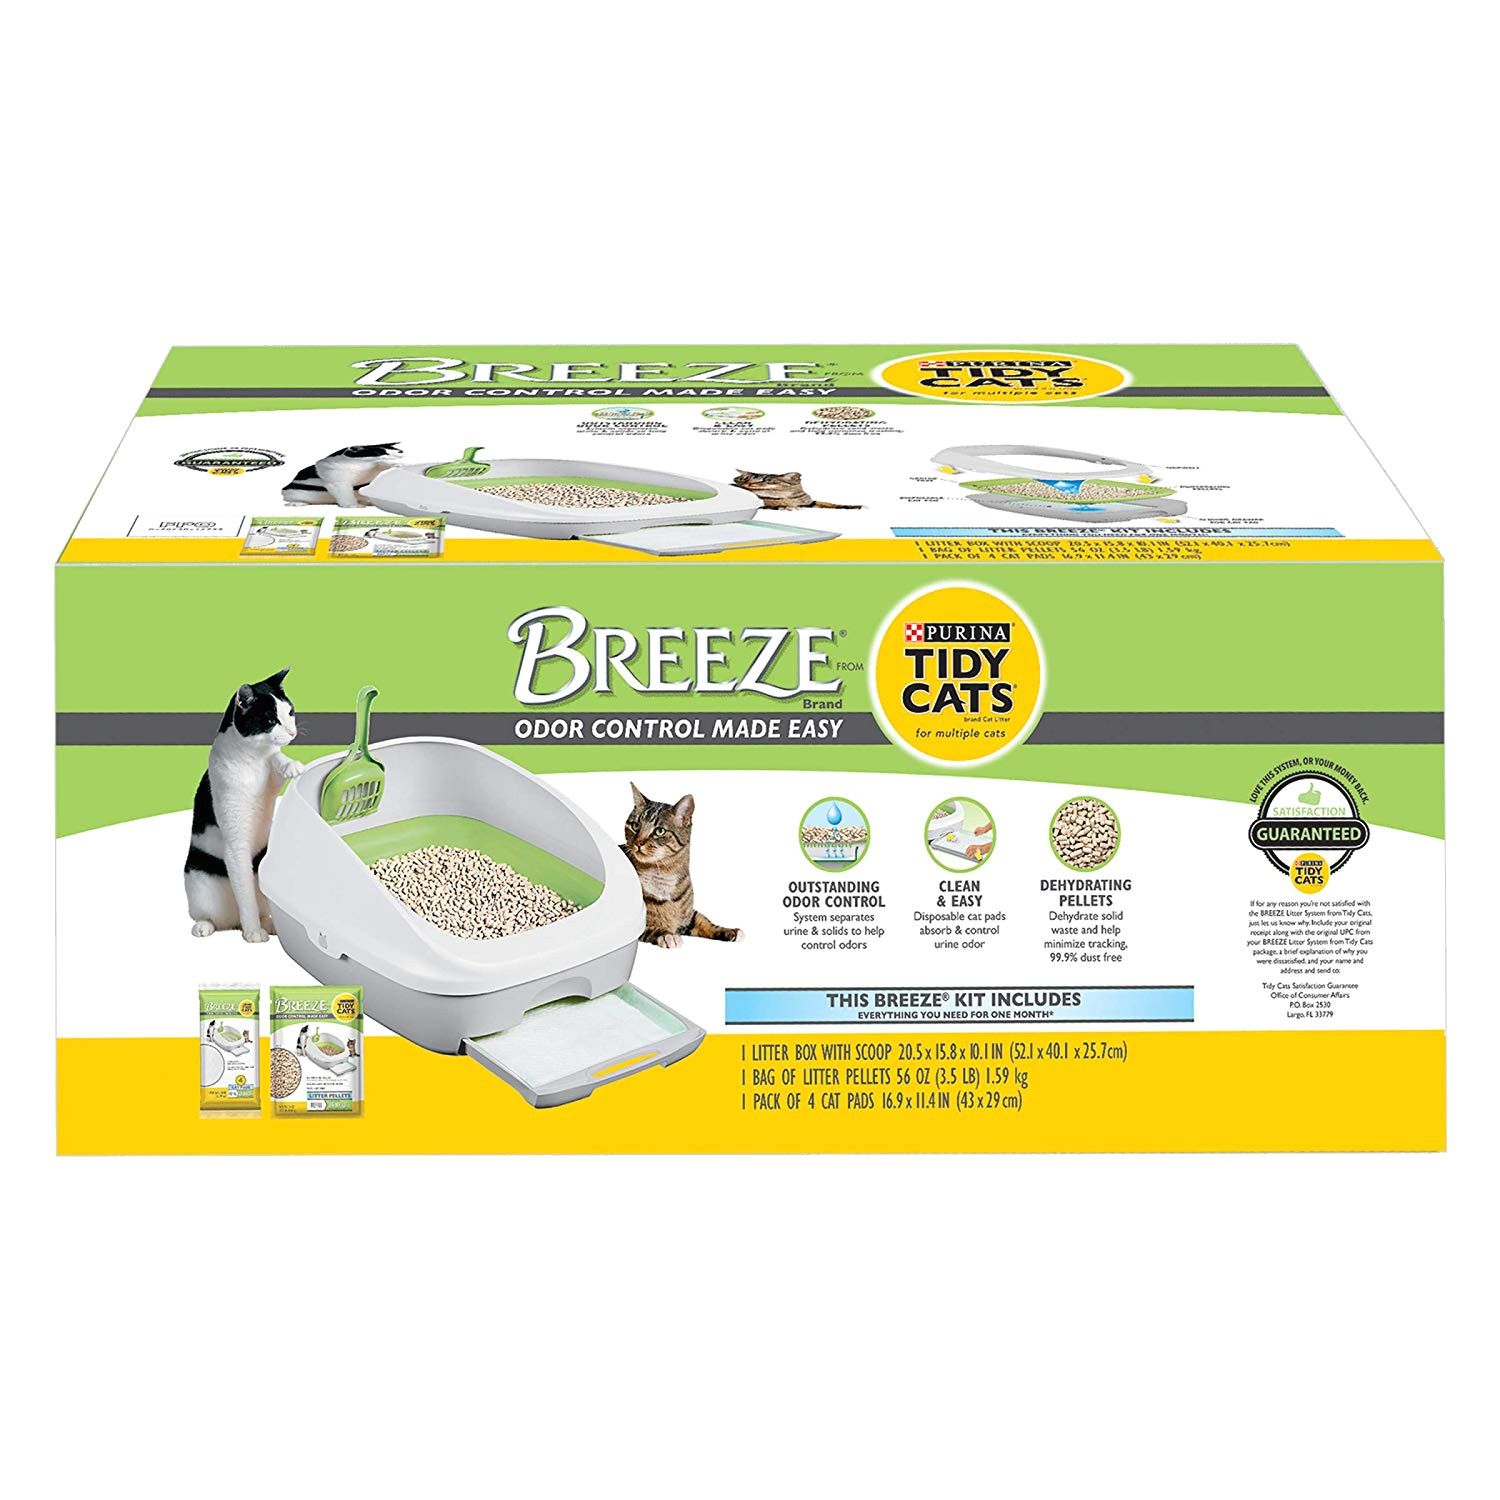 Purina Breeze Litter Box Review Amazon Com Purina Tidy Cats Breeze Cat Litter System Starter Kit